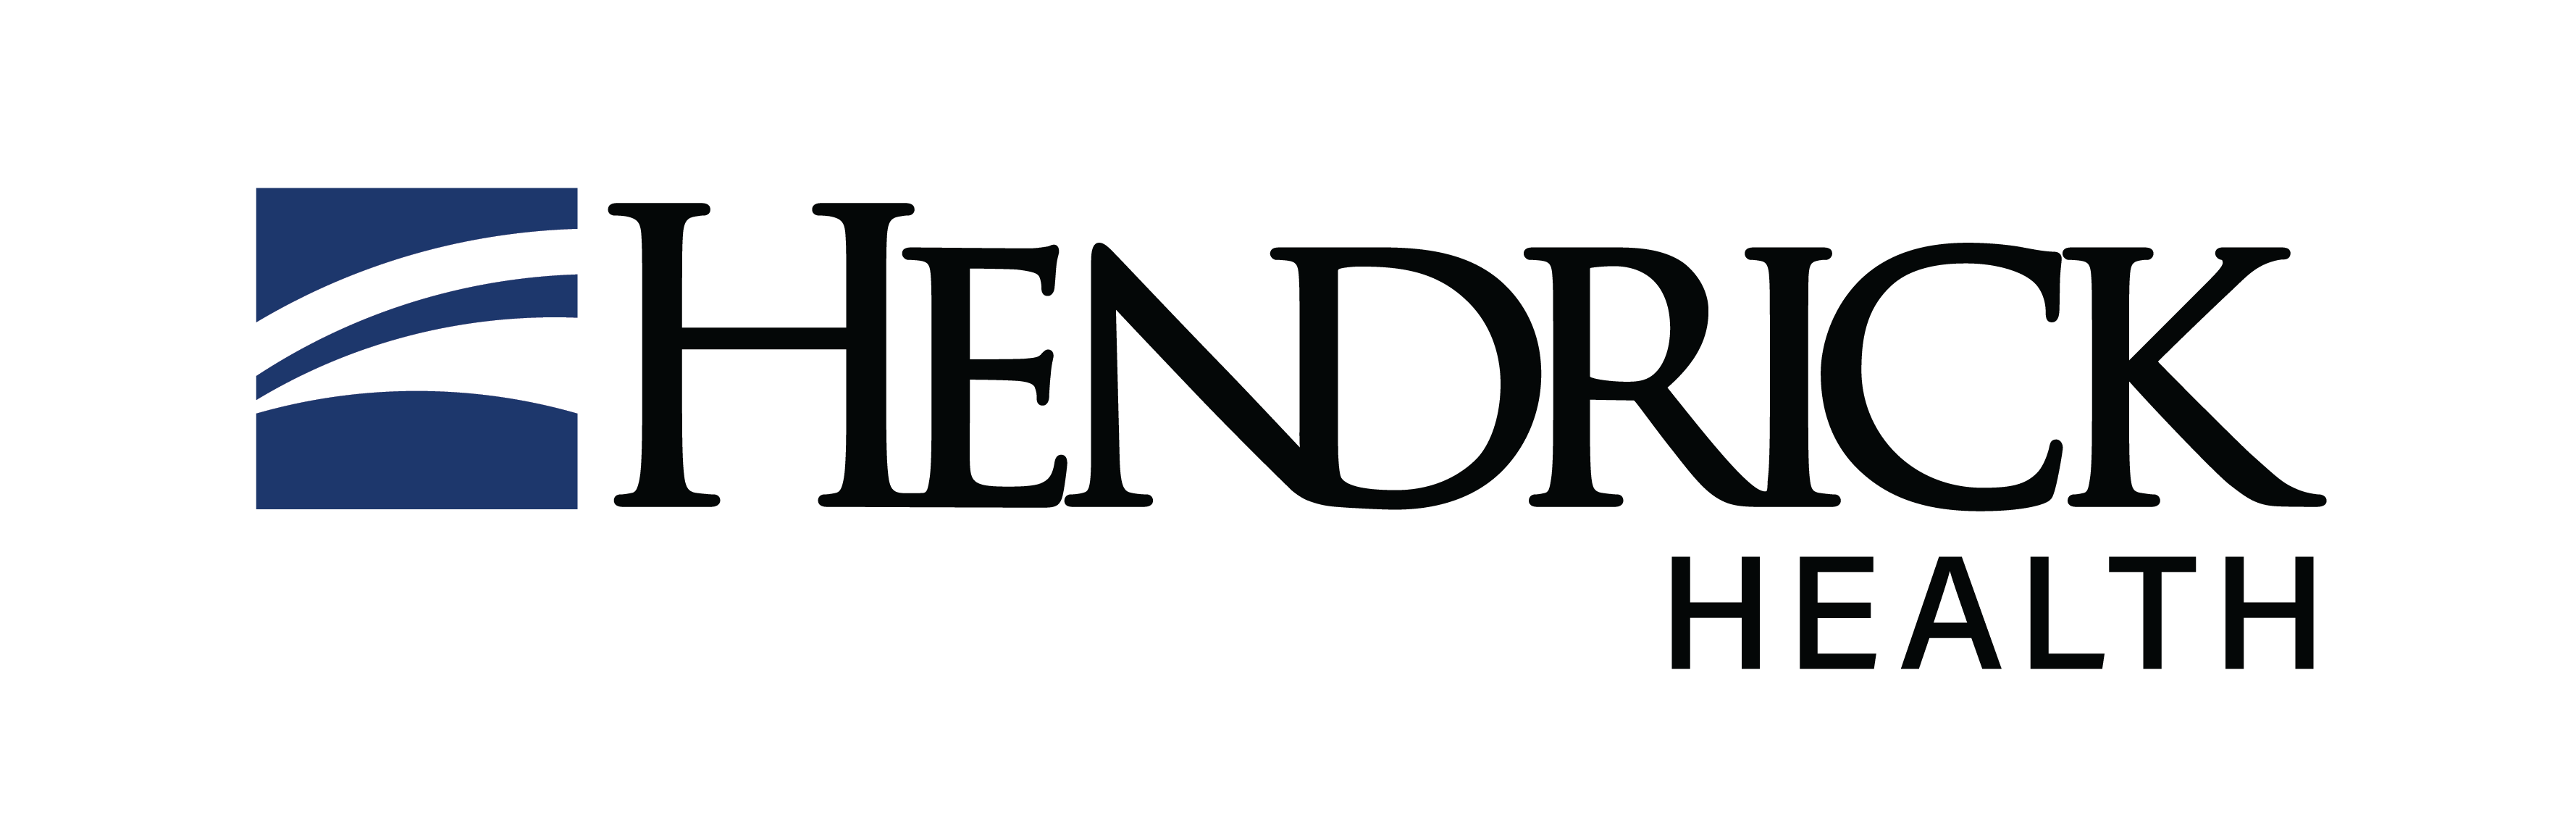 Hendrick Outpatient Pharmacy logo